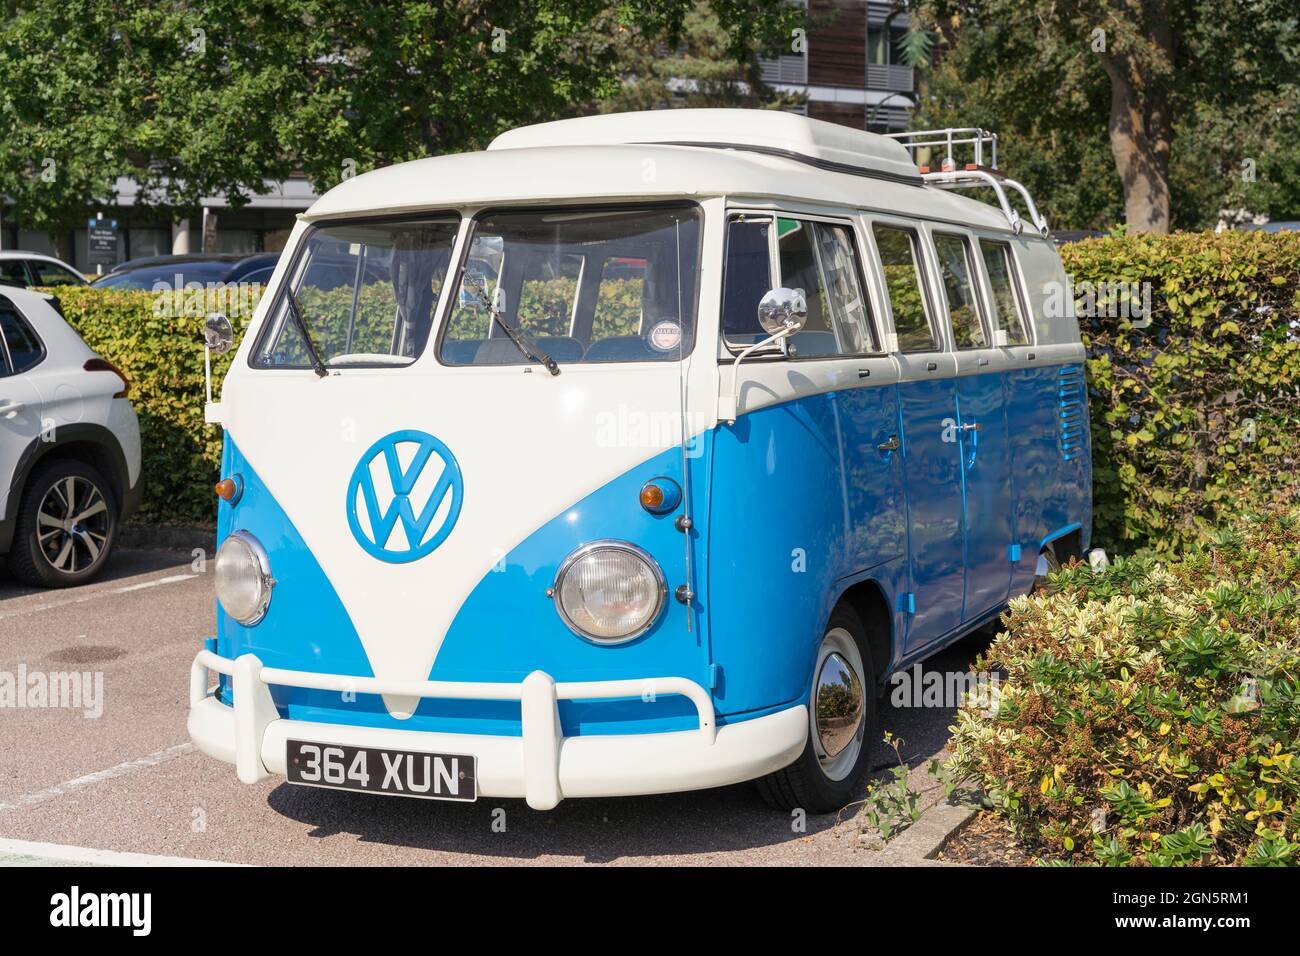 Blue VW VOLKSWAGEN TRANSPORTER, Hatfield, England Stock Photo - Alamy